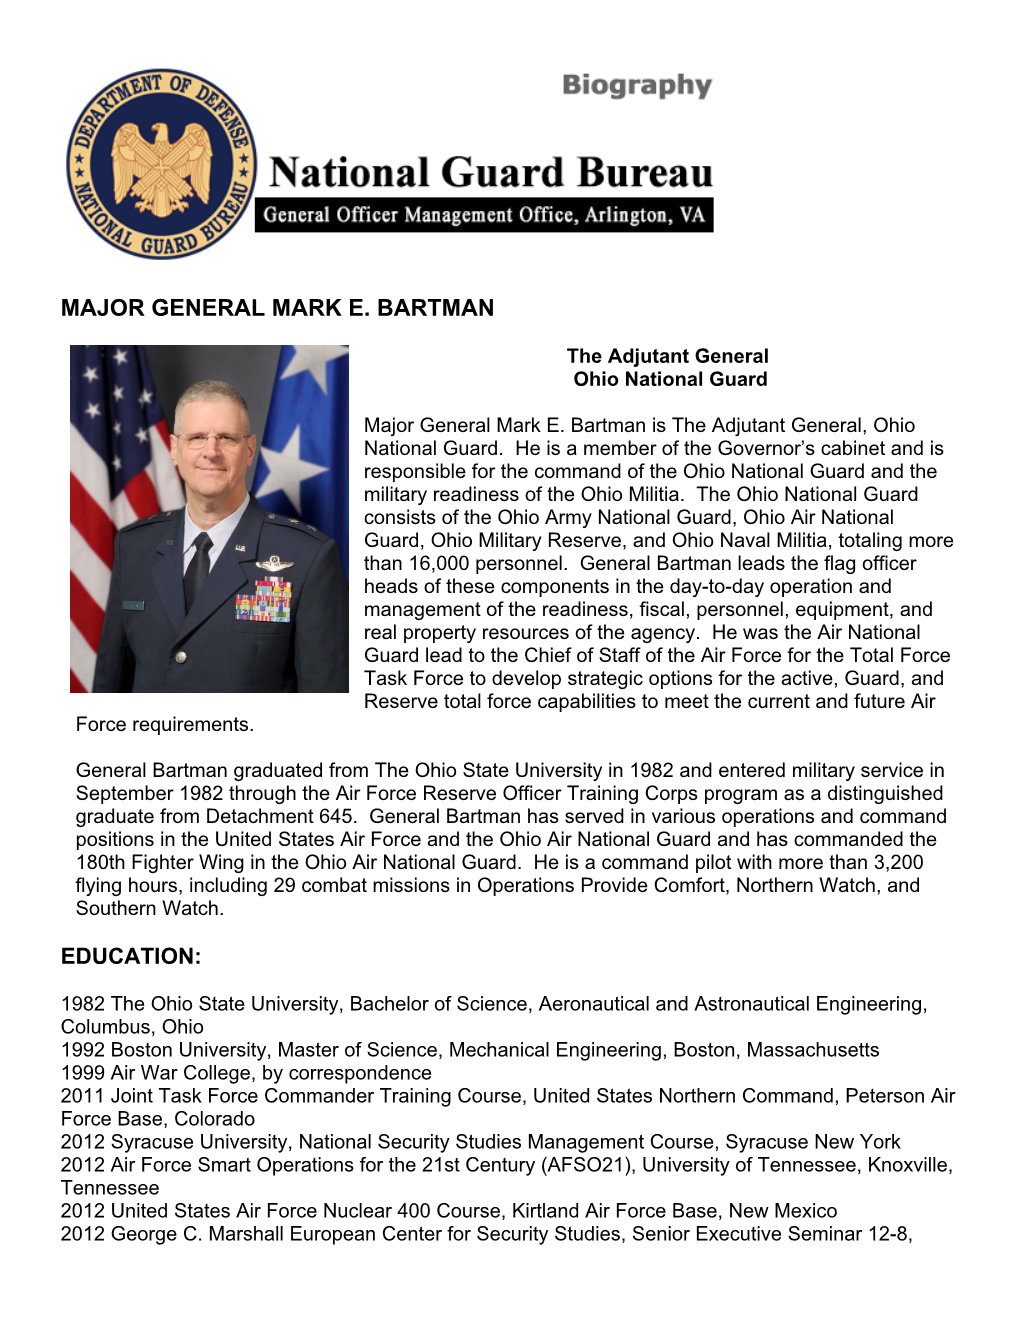 Major General Mark E. Bartman Education